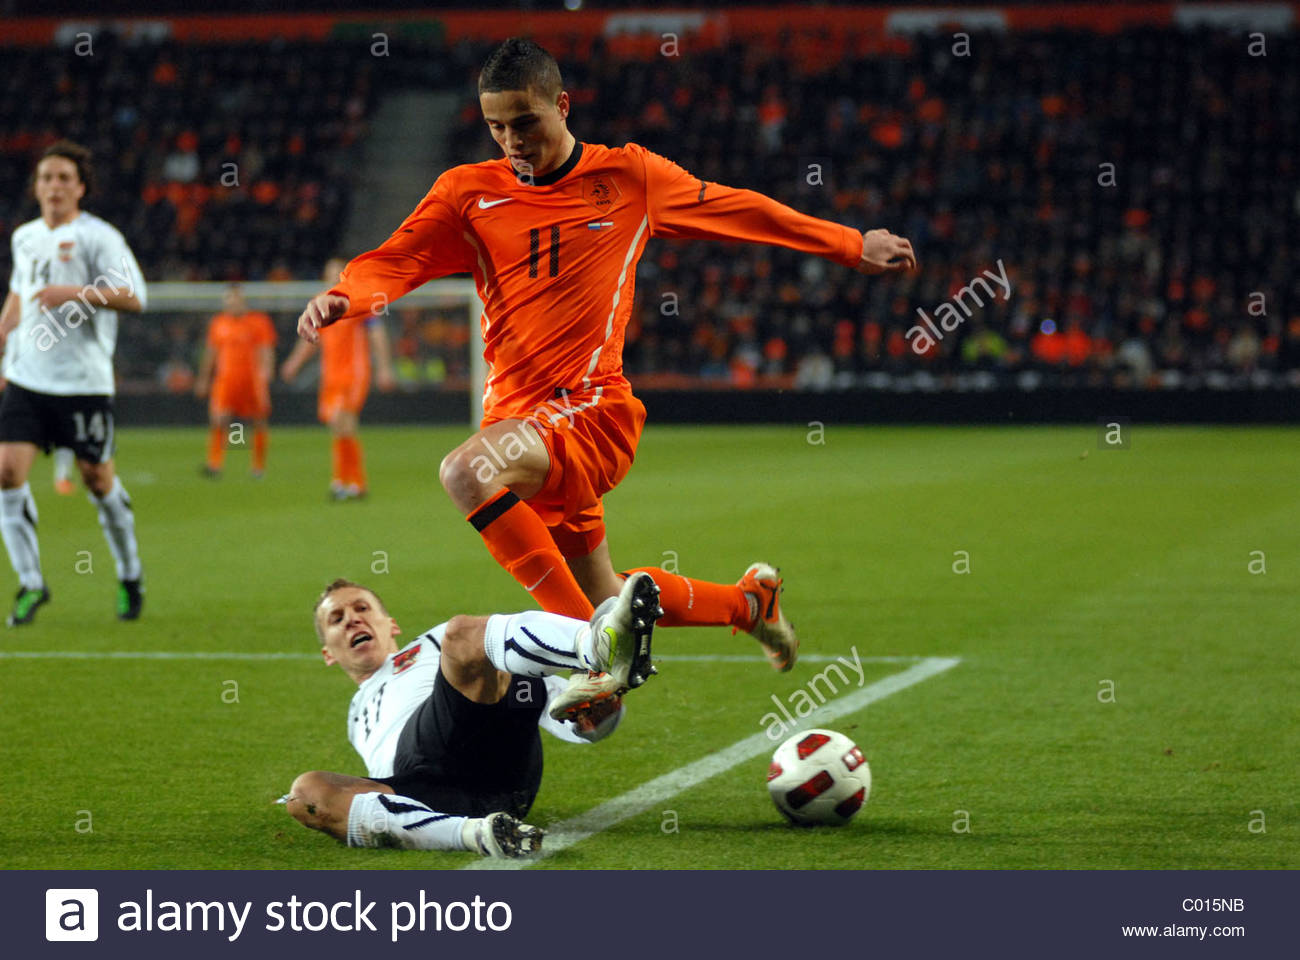 Football - International Friendly - Netherlands vs. Austria. Dutchman